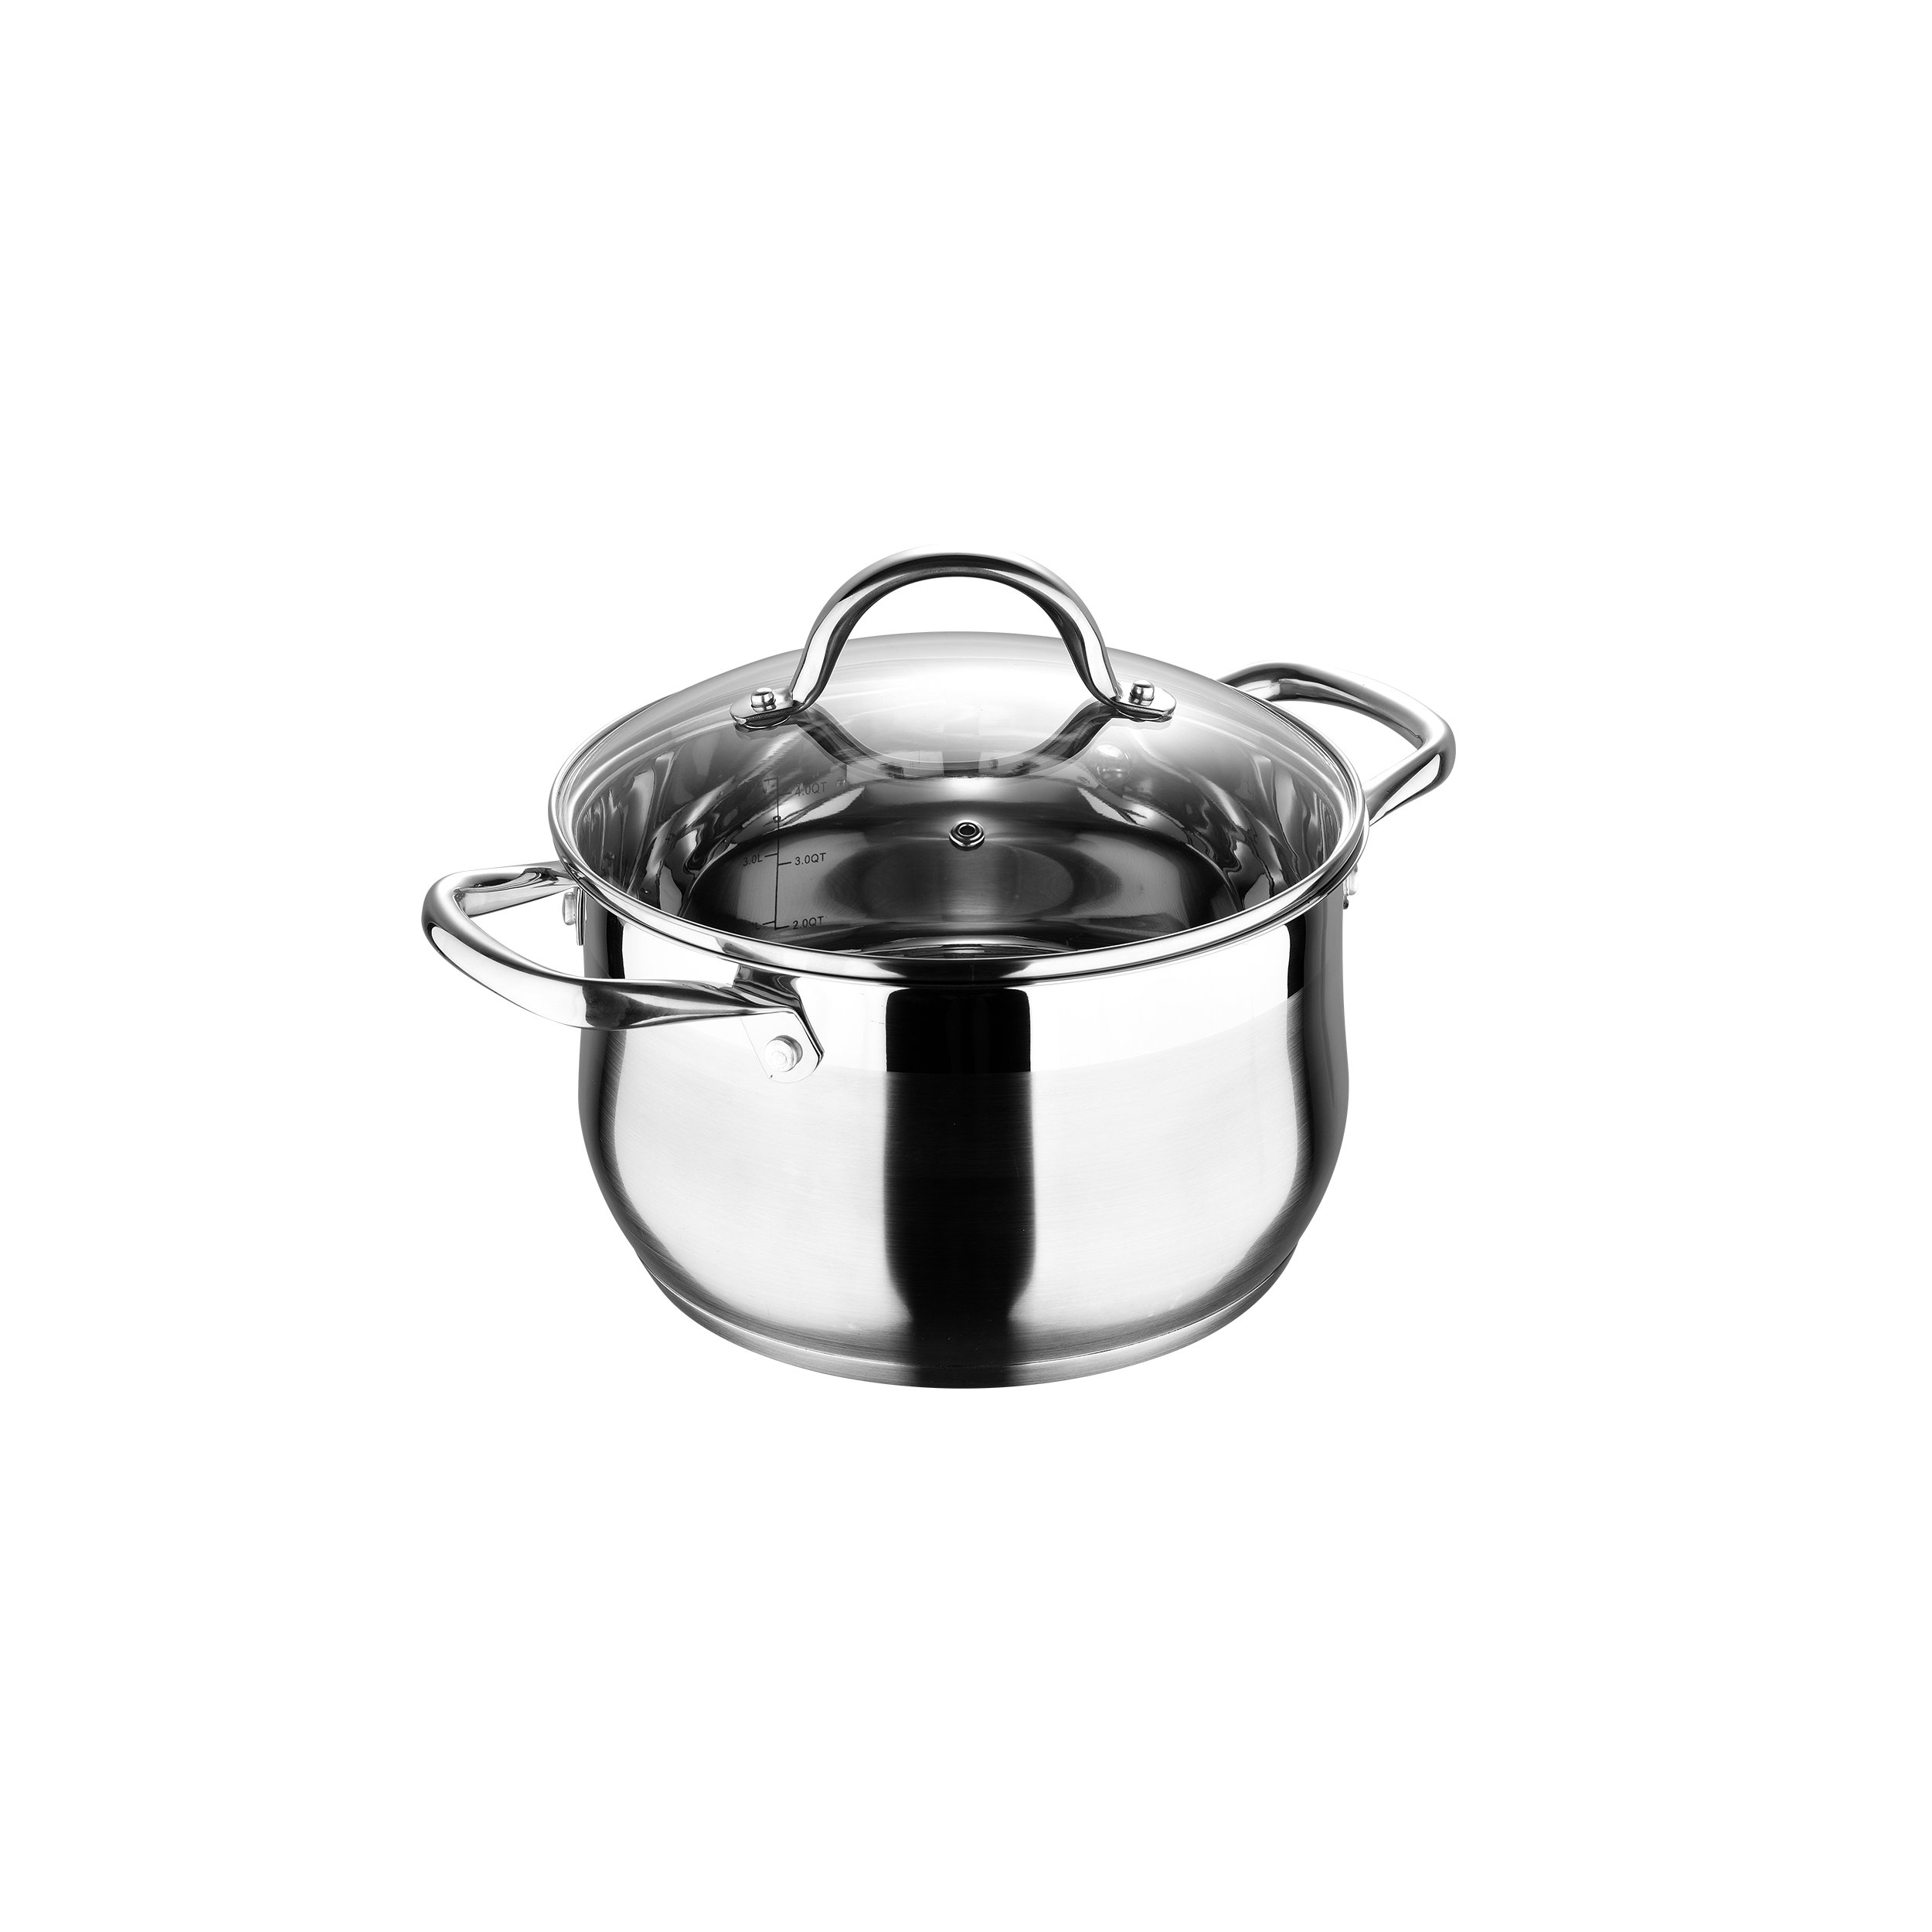 Calphalon Tri-Ply Stainless Steel Cookware, Dutch Oven, 5-quart